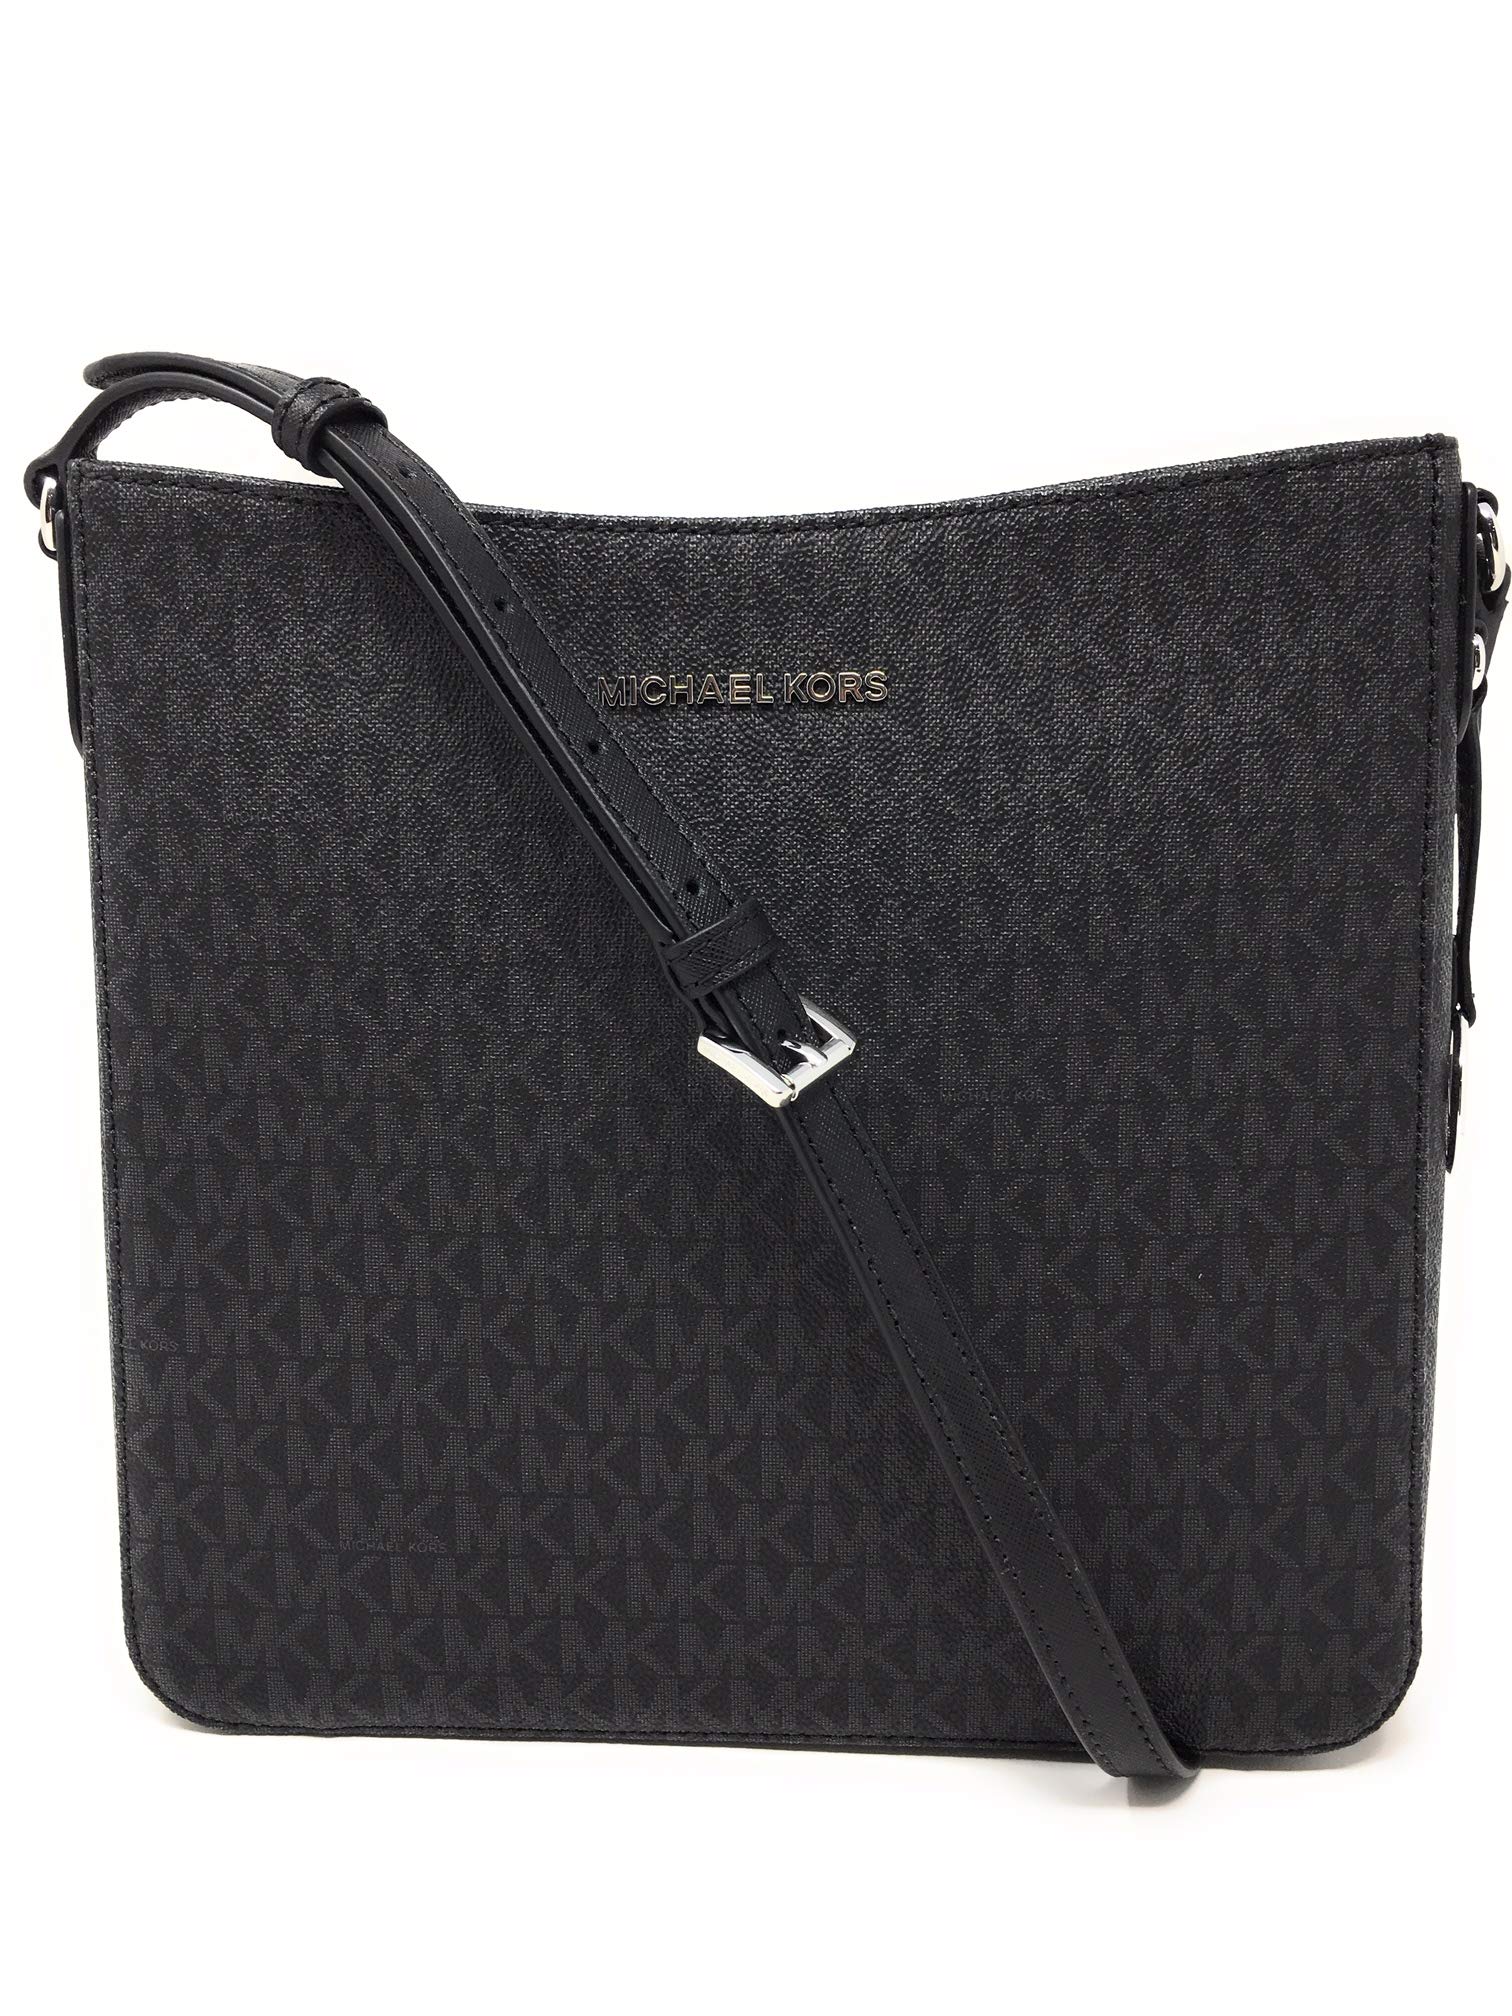 Michael Kors Jet Set Messenger Bag Womens Fashion Bags  Wallets  Crossbody Bags on Carousell